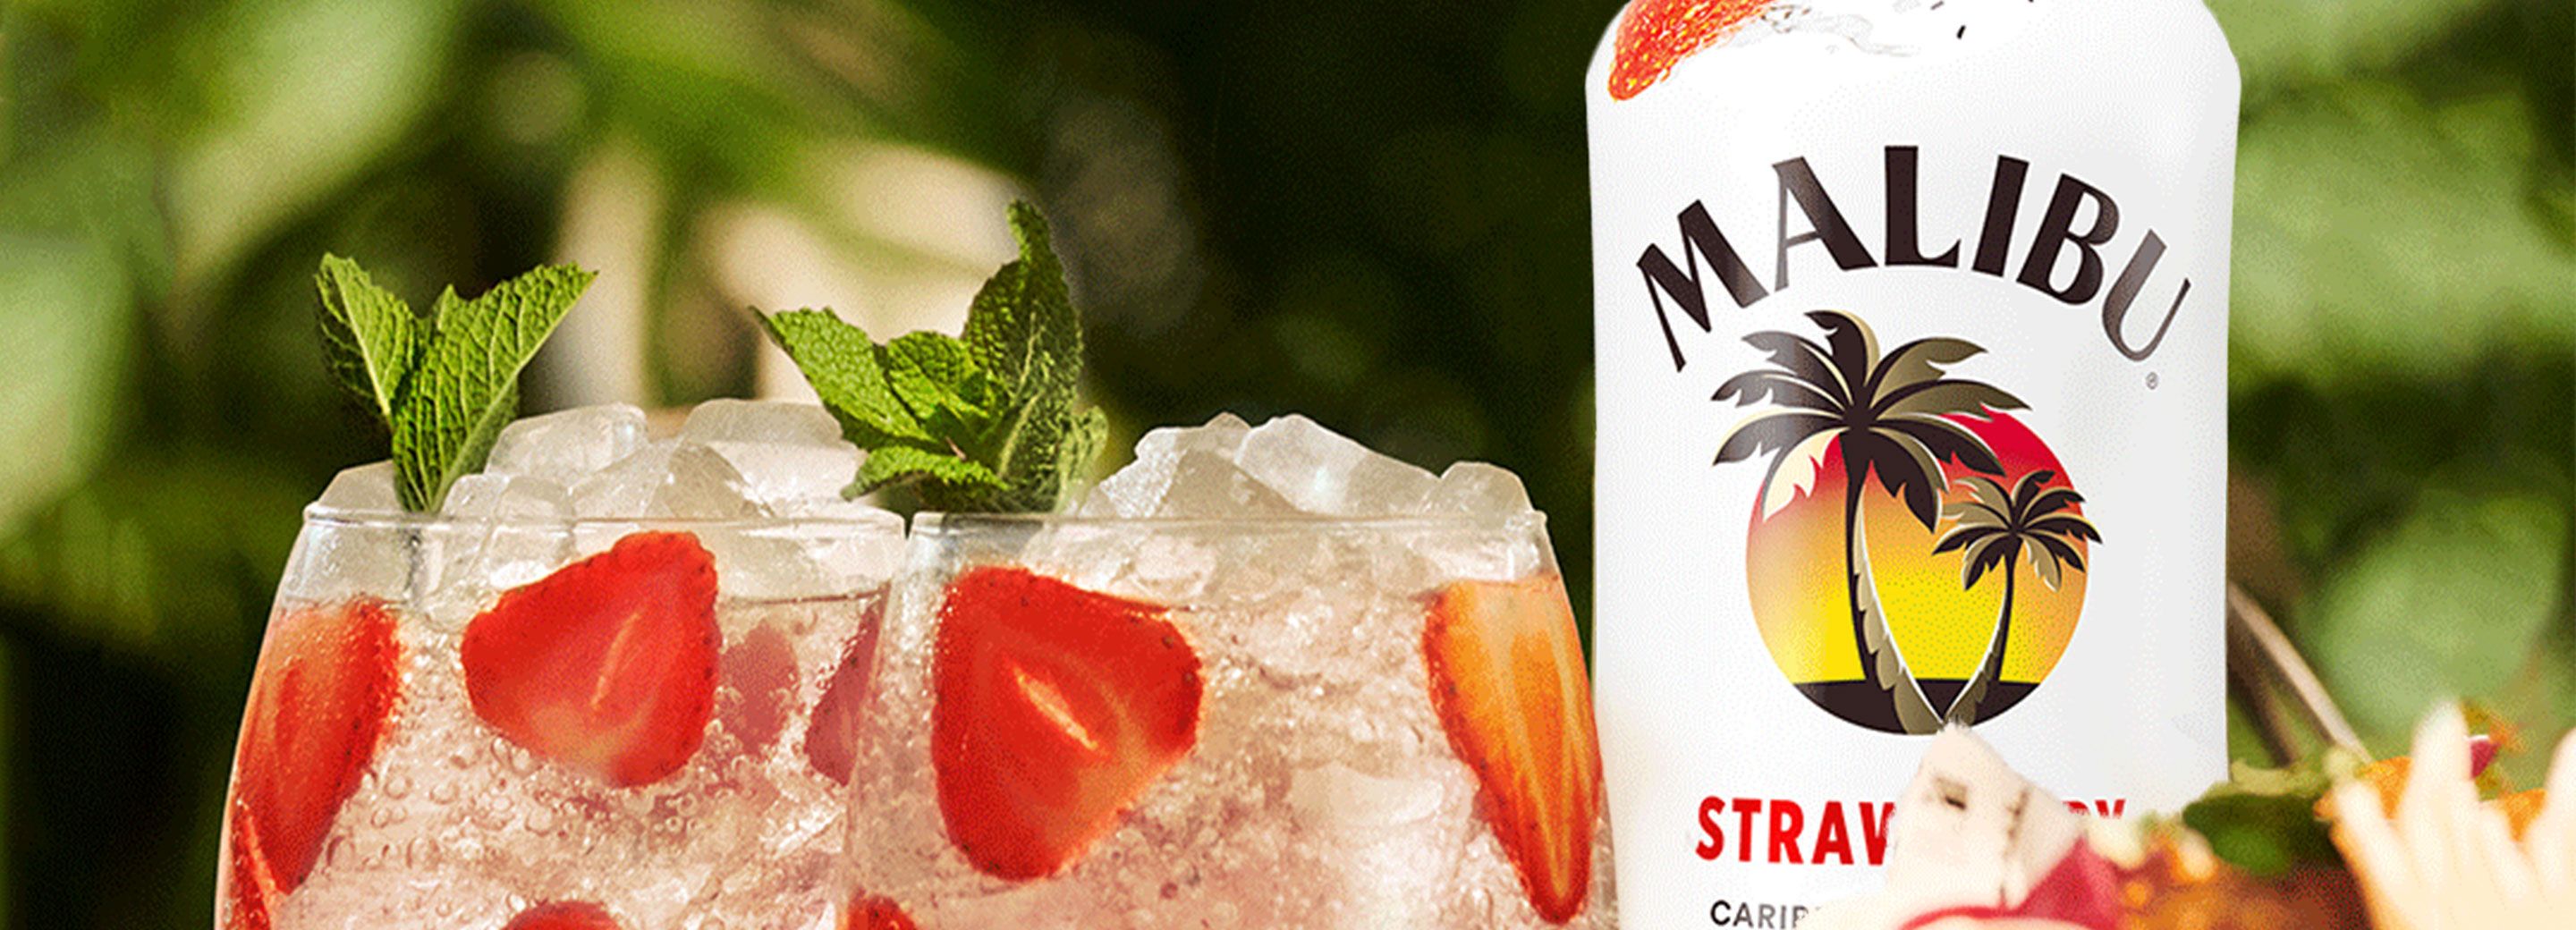 Malibu Strawberry & Soda